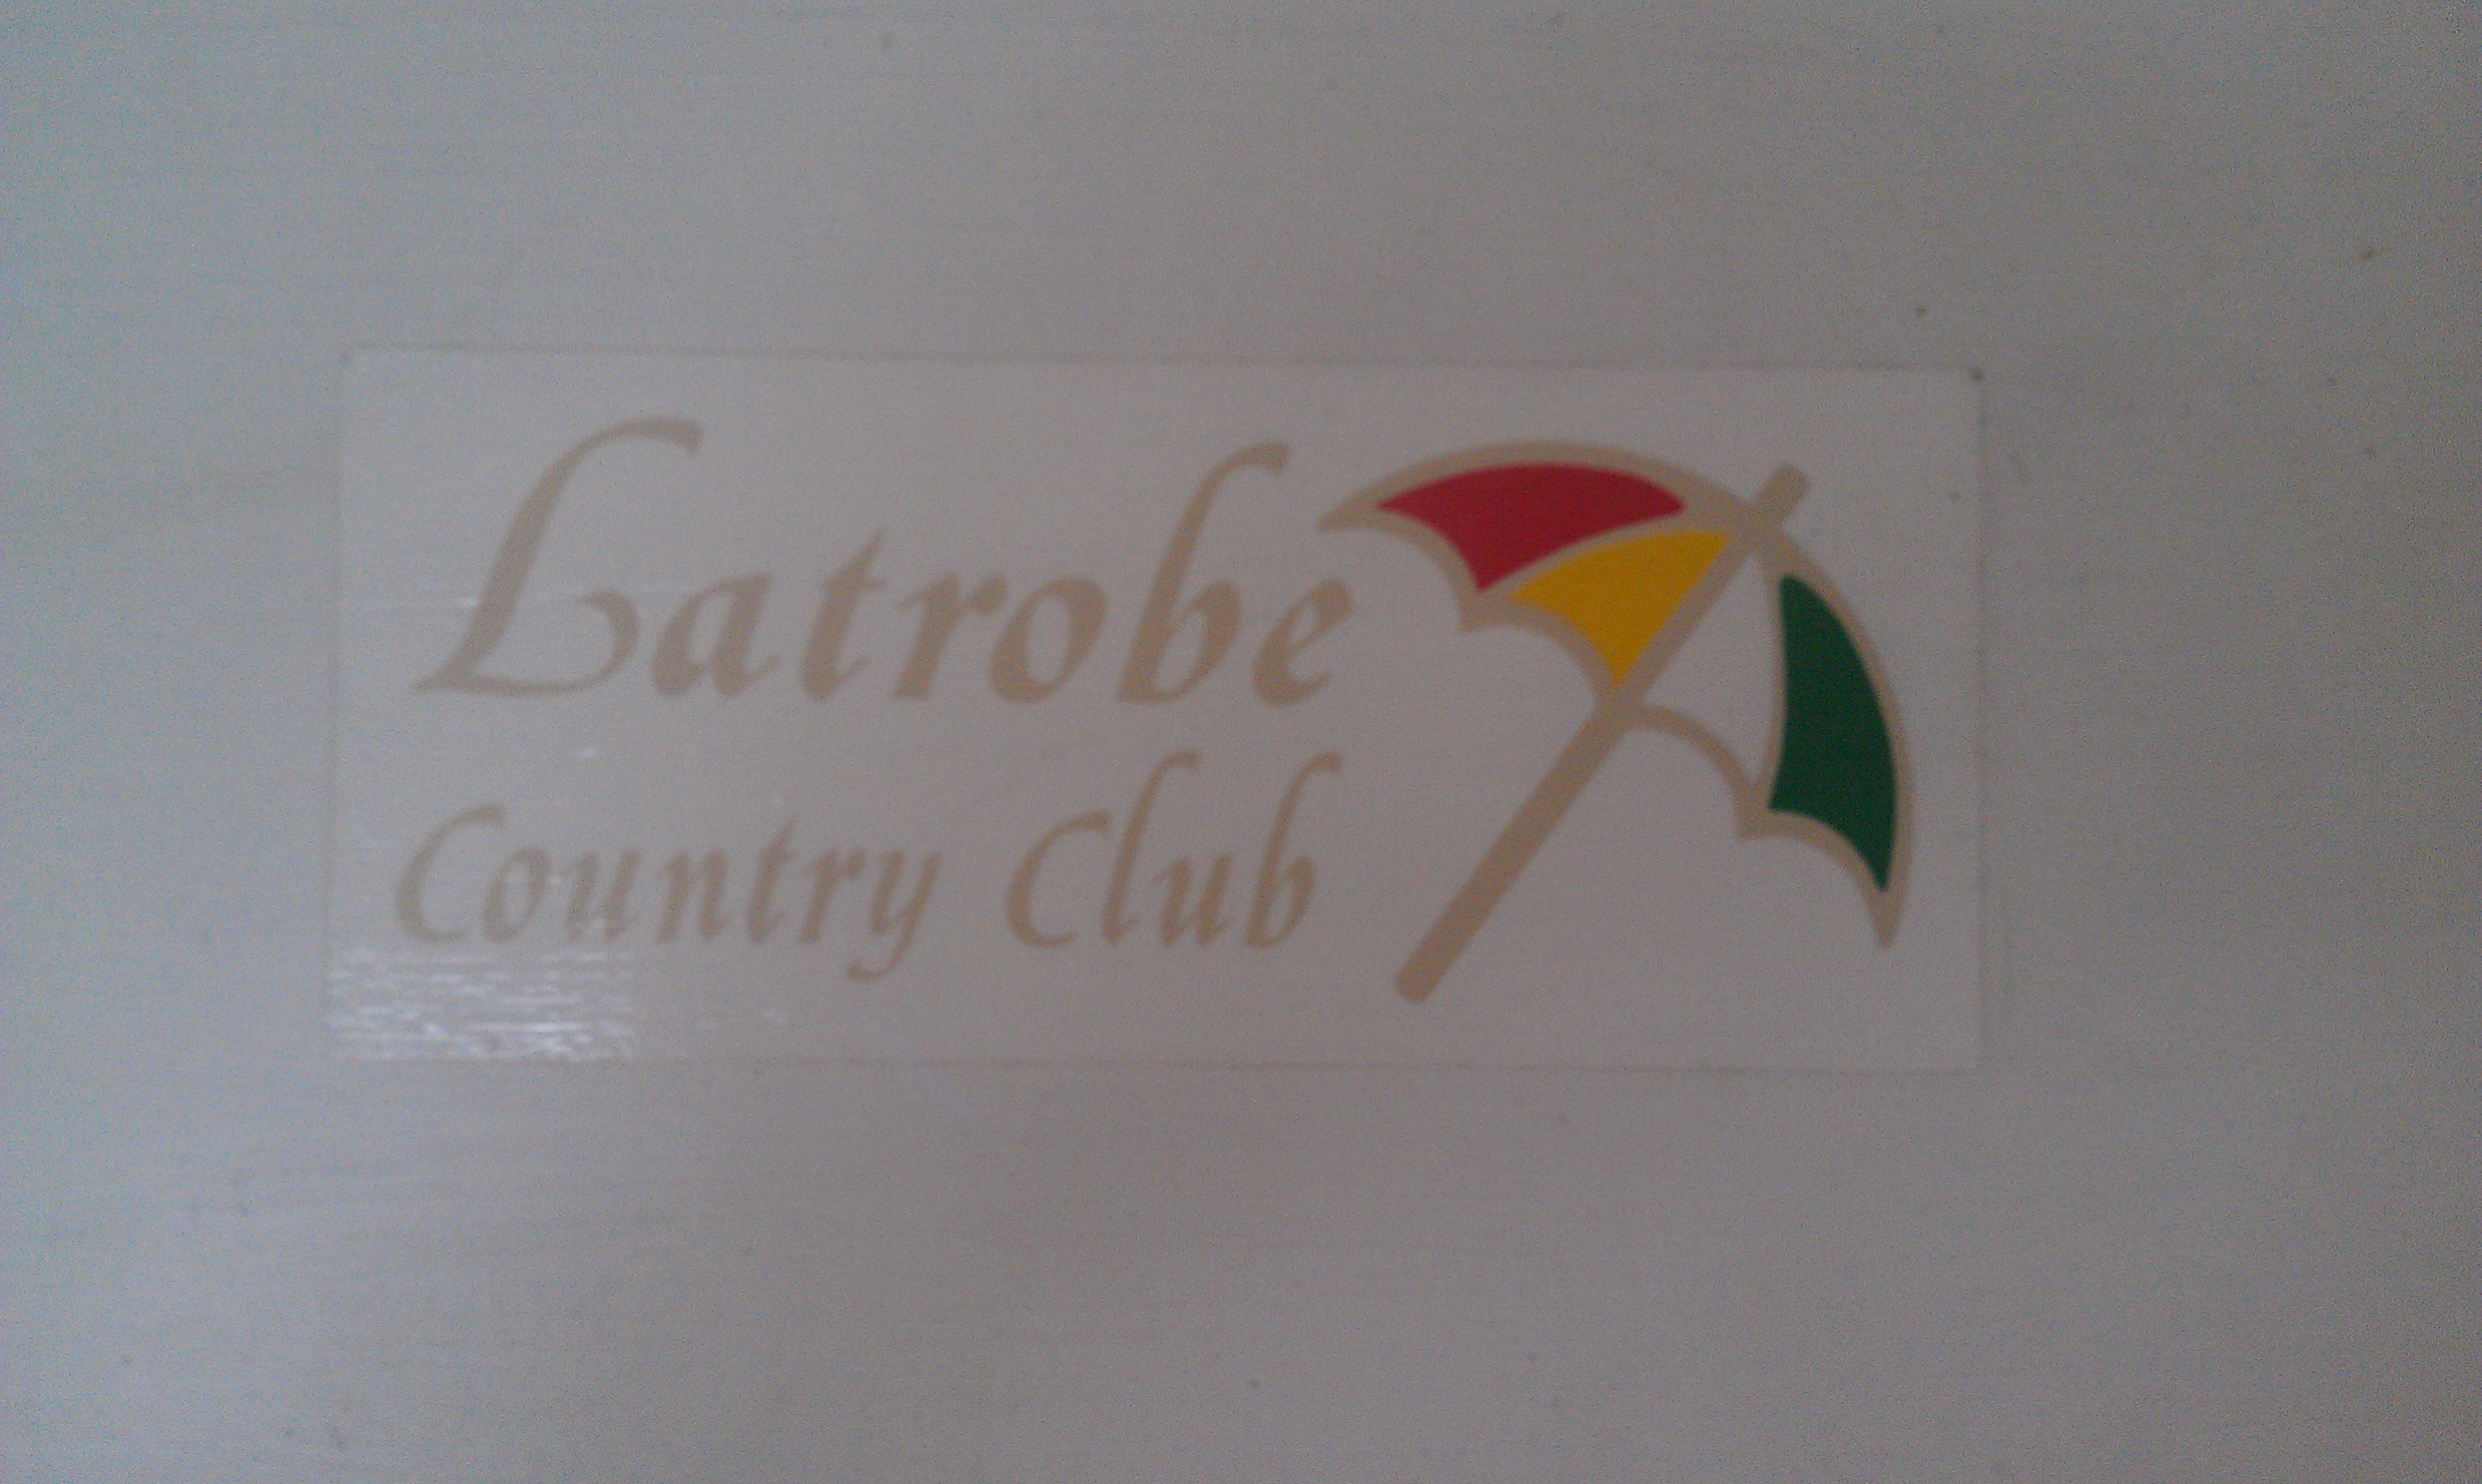 Latrobe Country Club logo